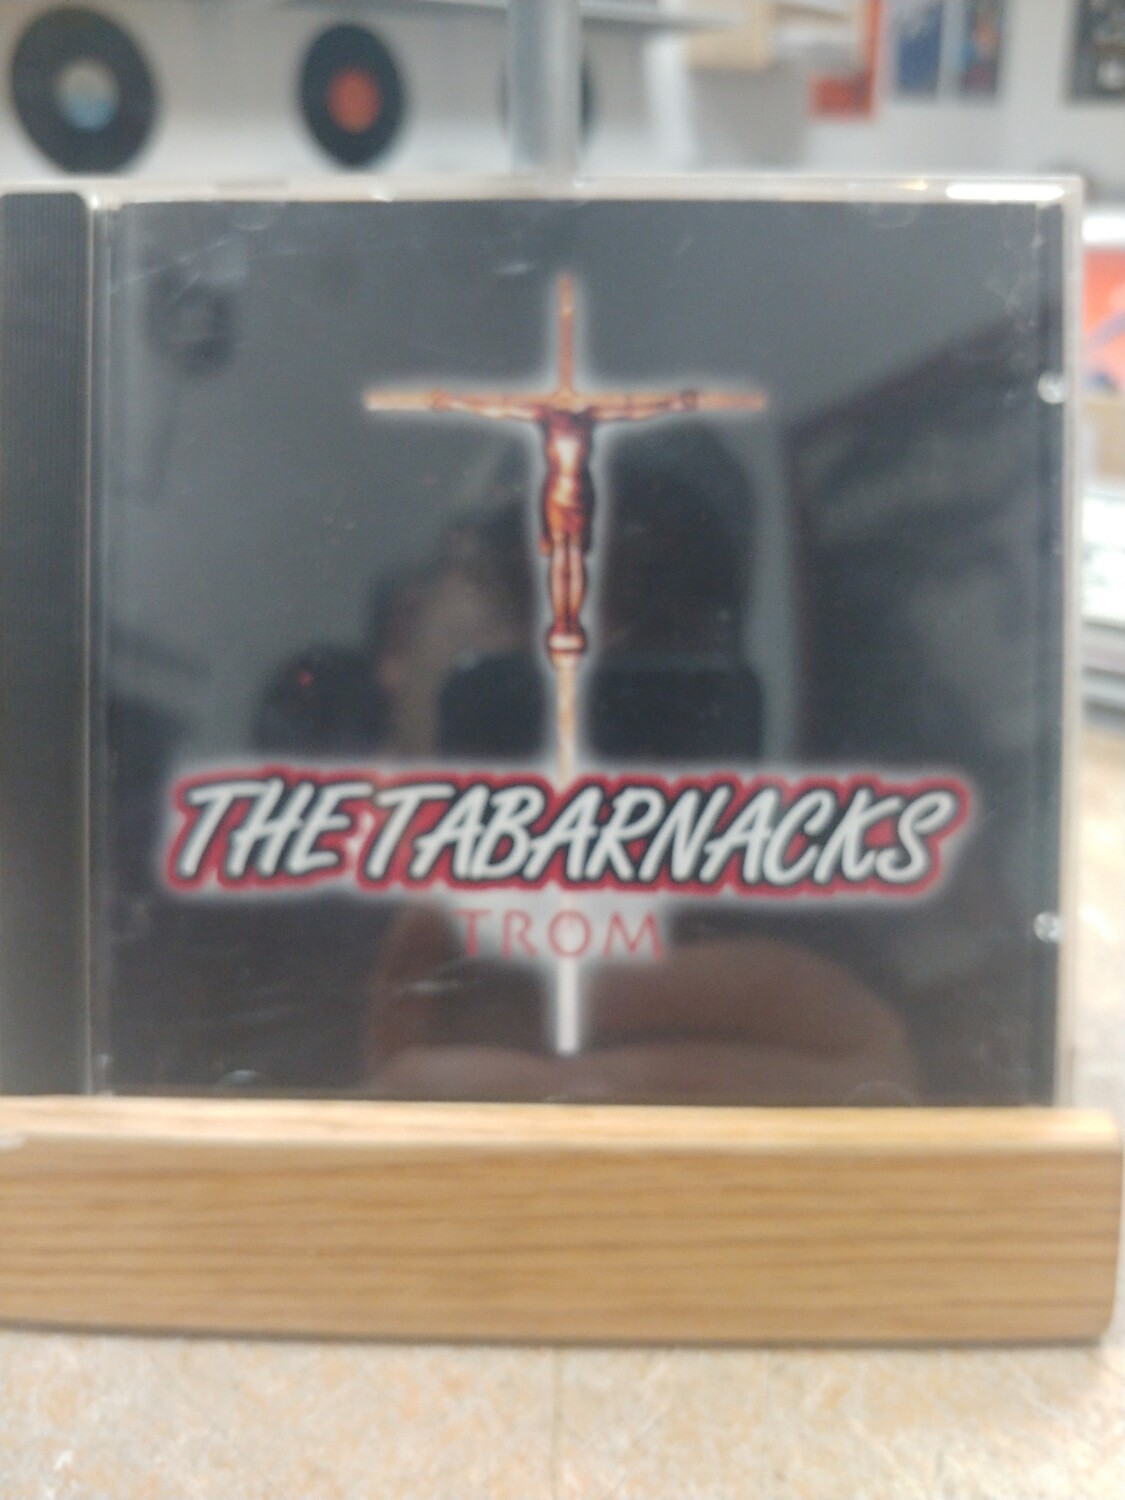 The Tabarnacks - Trom (CD)